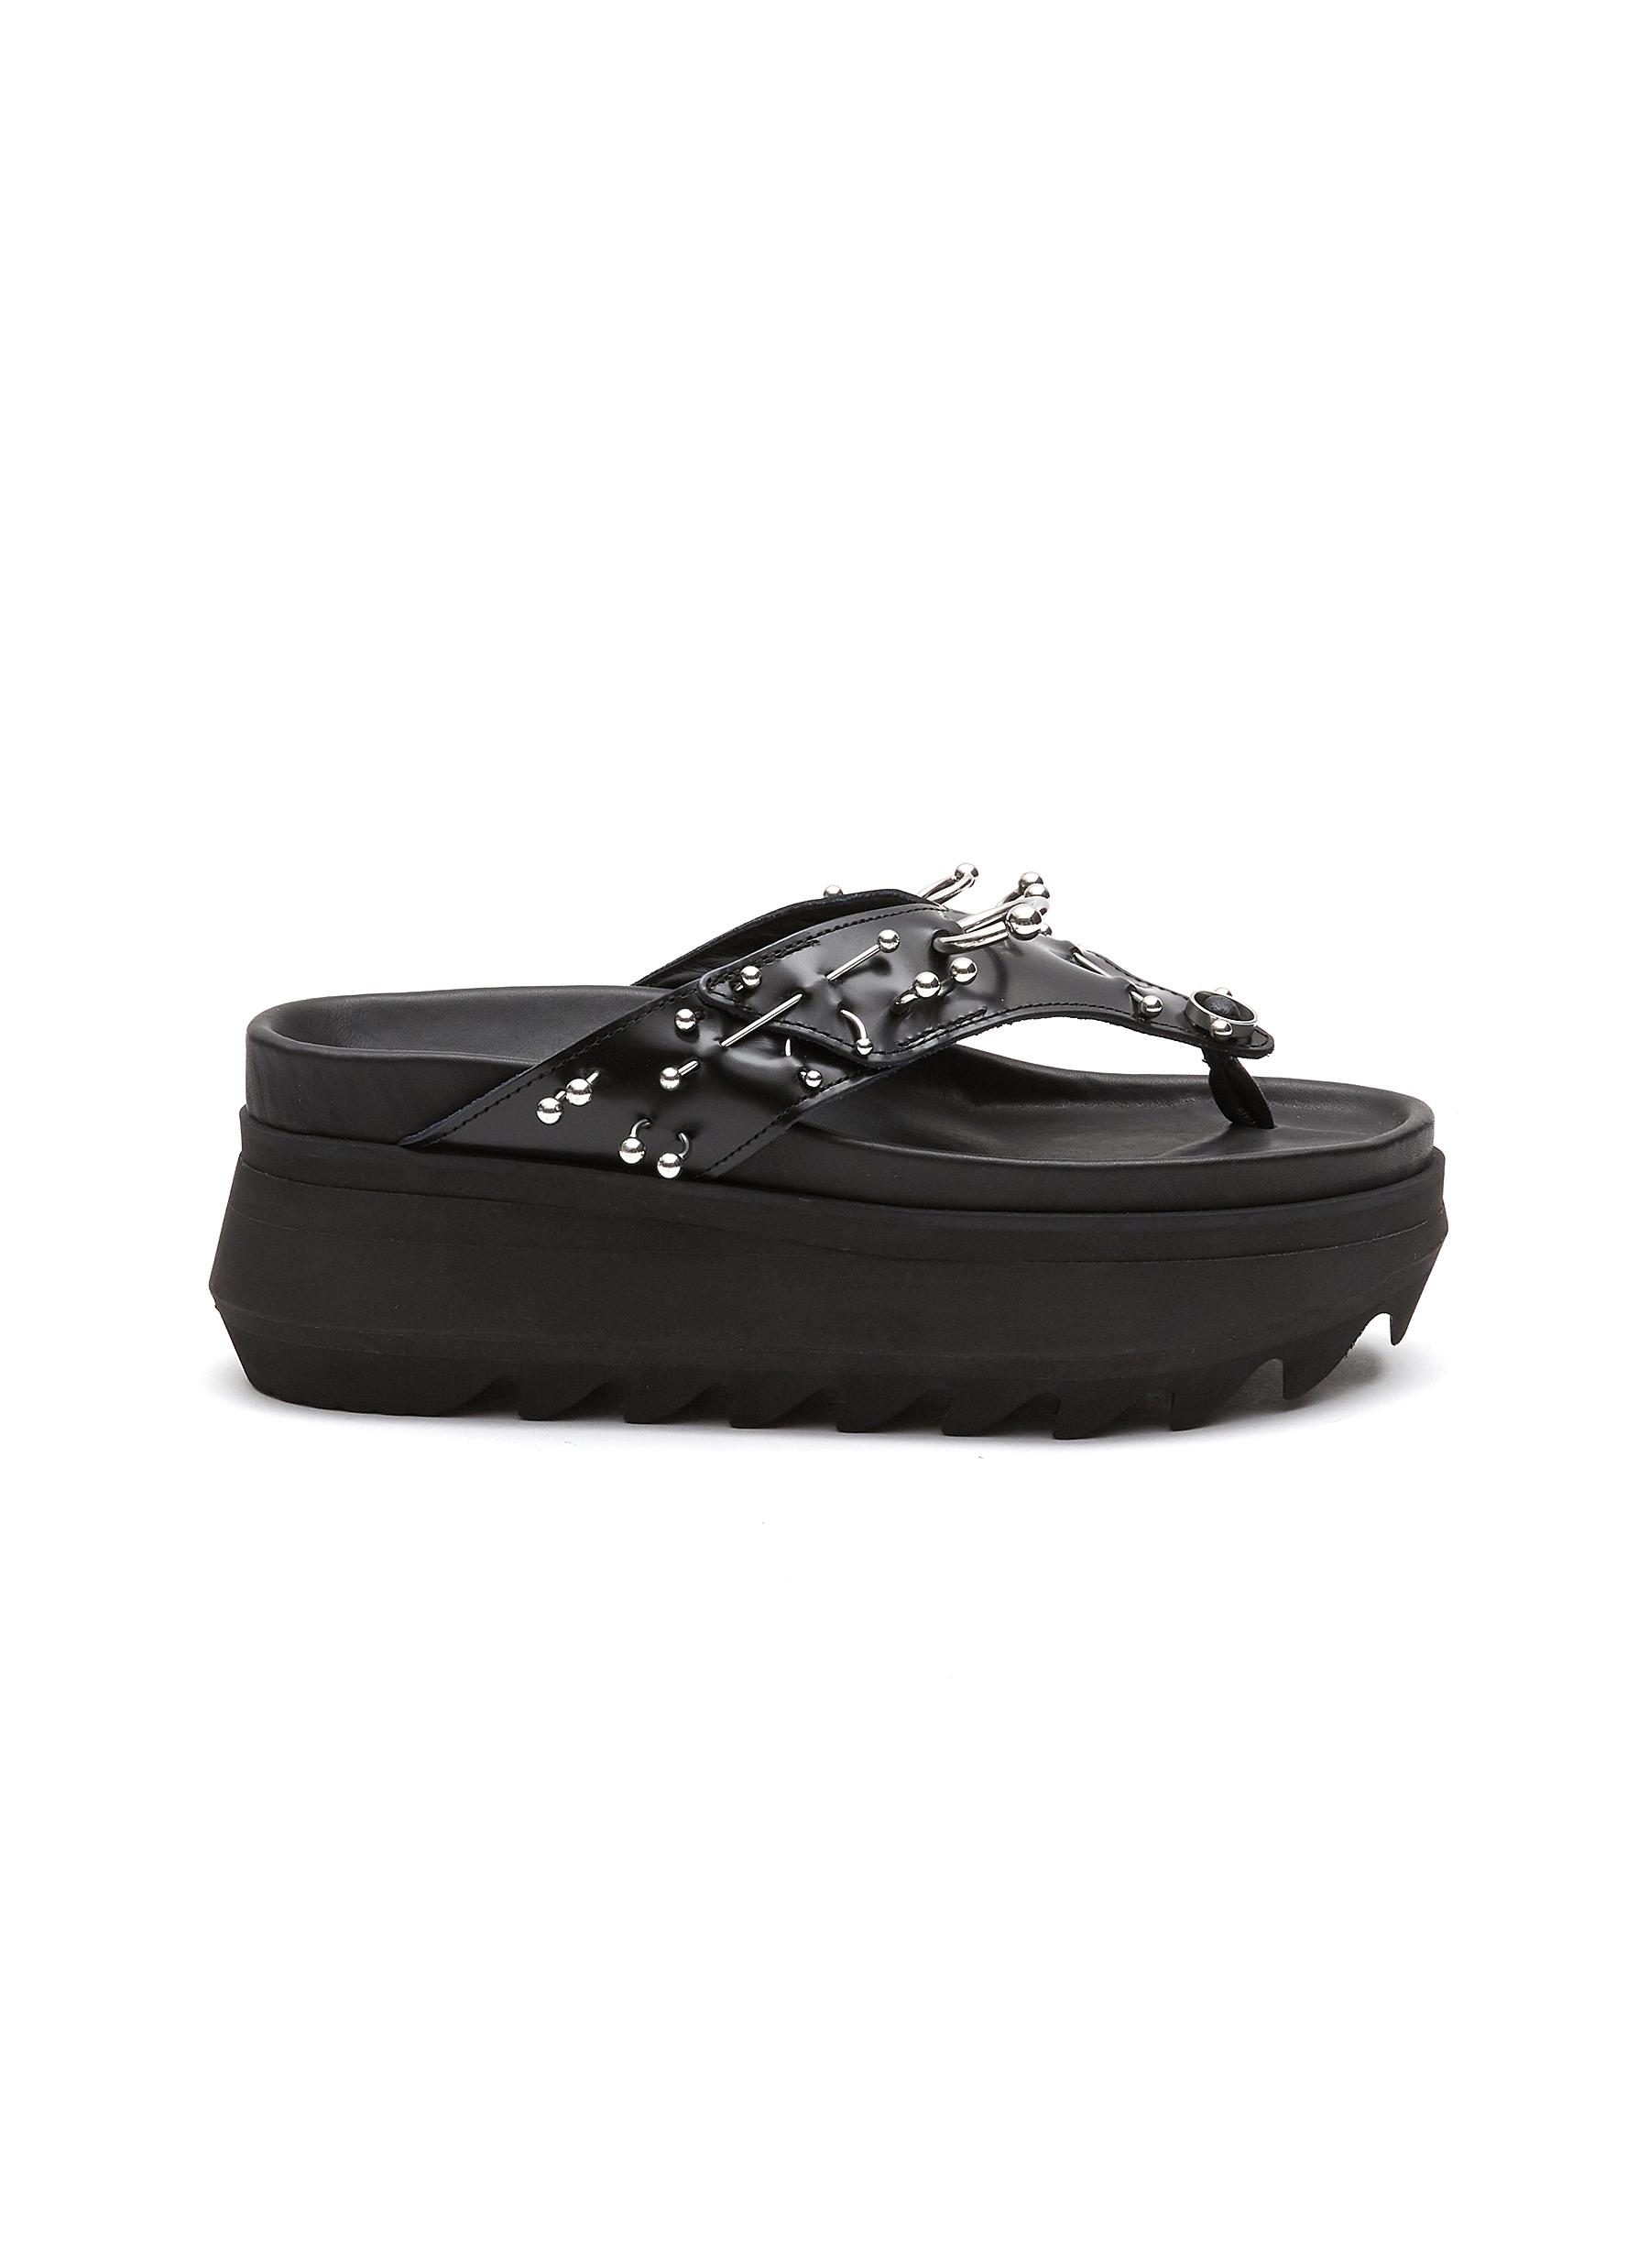 Sacai Black Leather Wedge Thong Sandals | Smart Closet